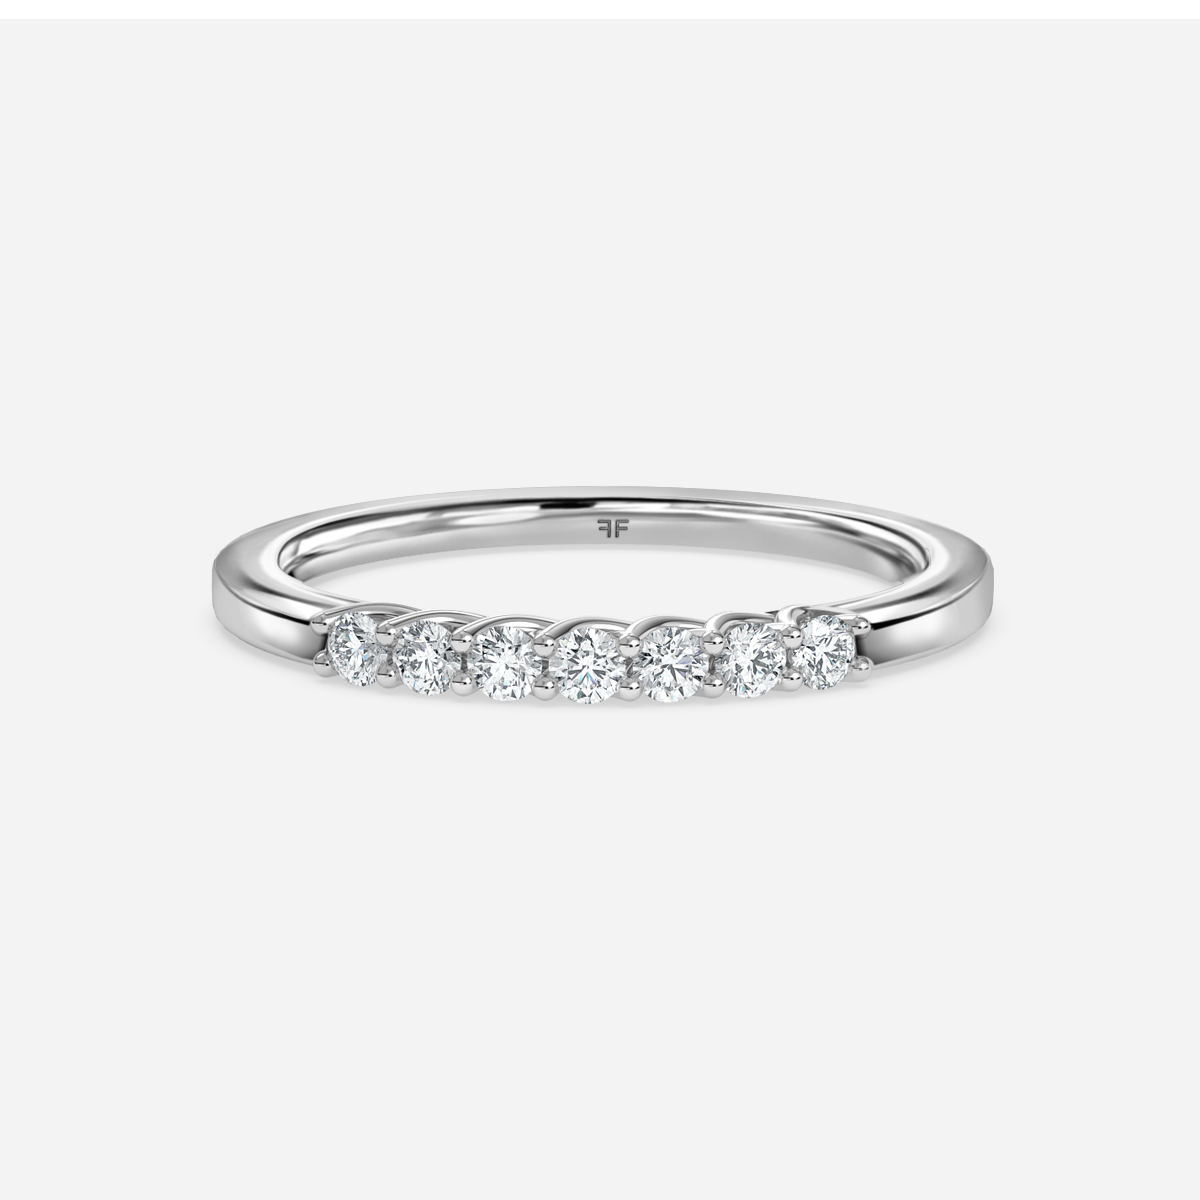 Women's diamond wedding rings